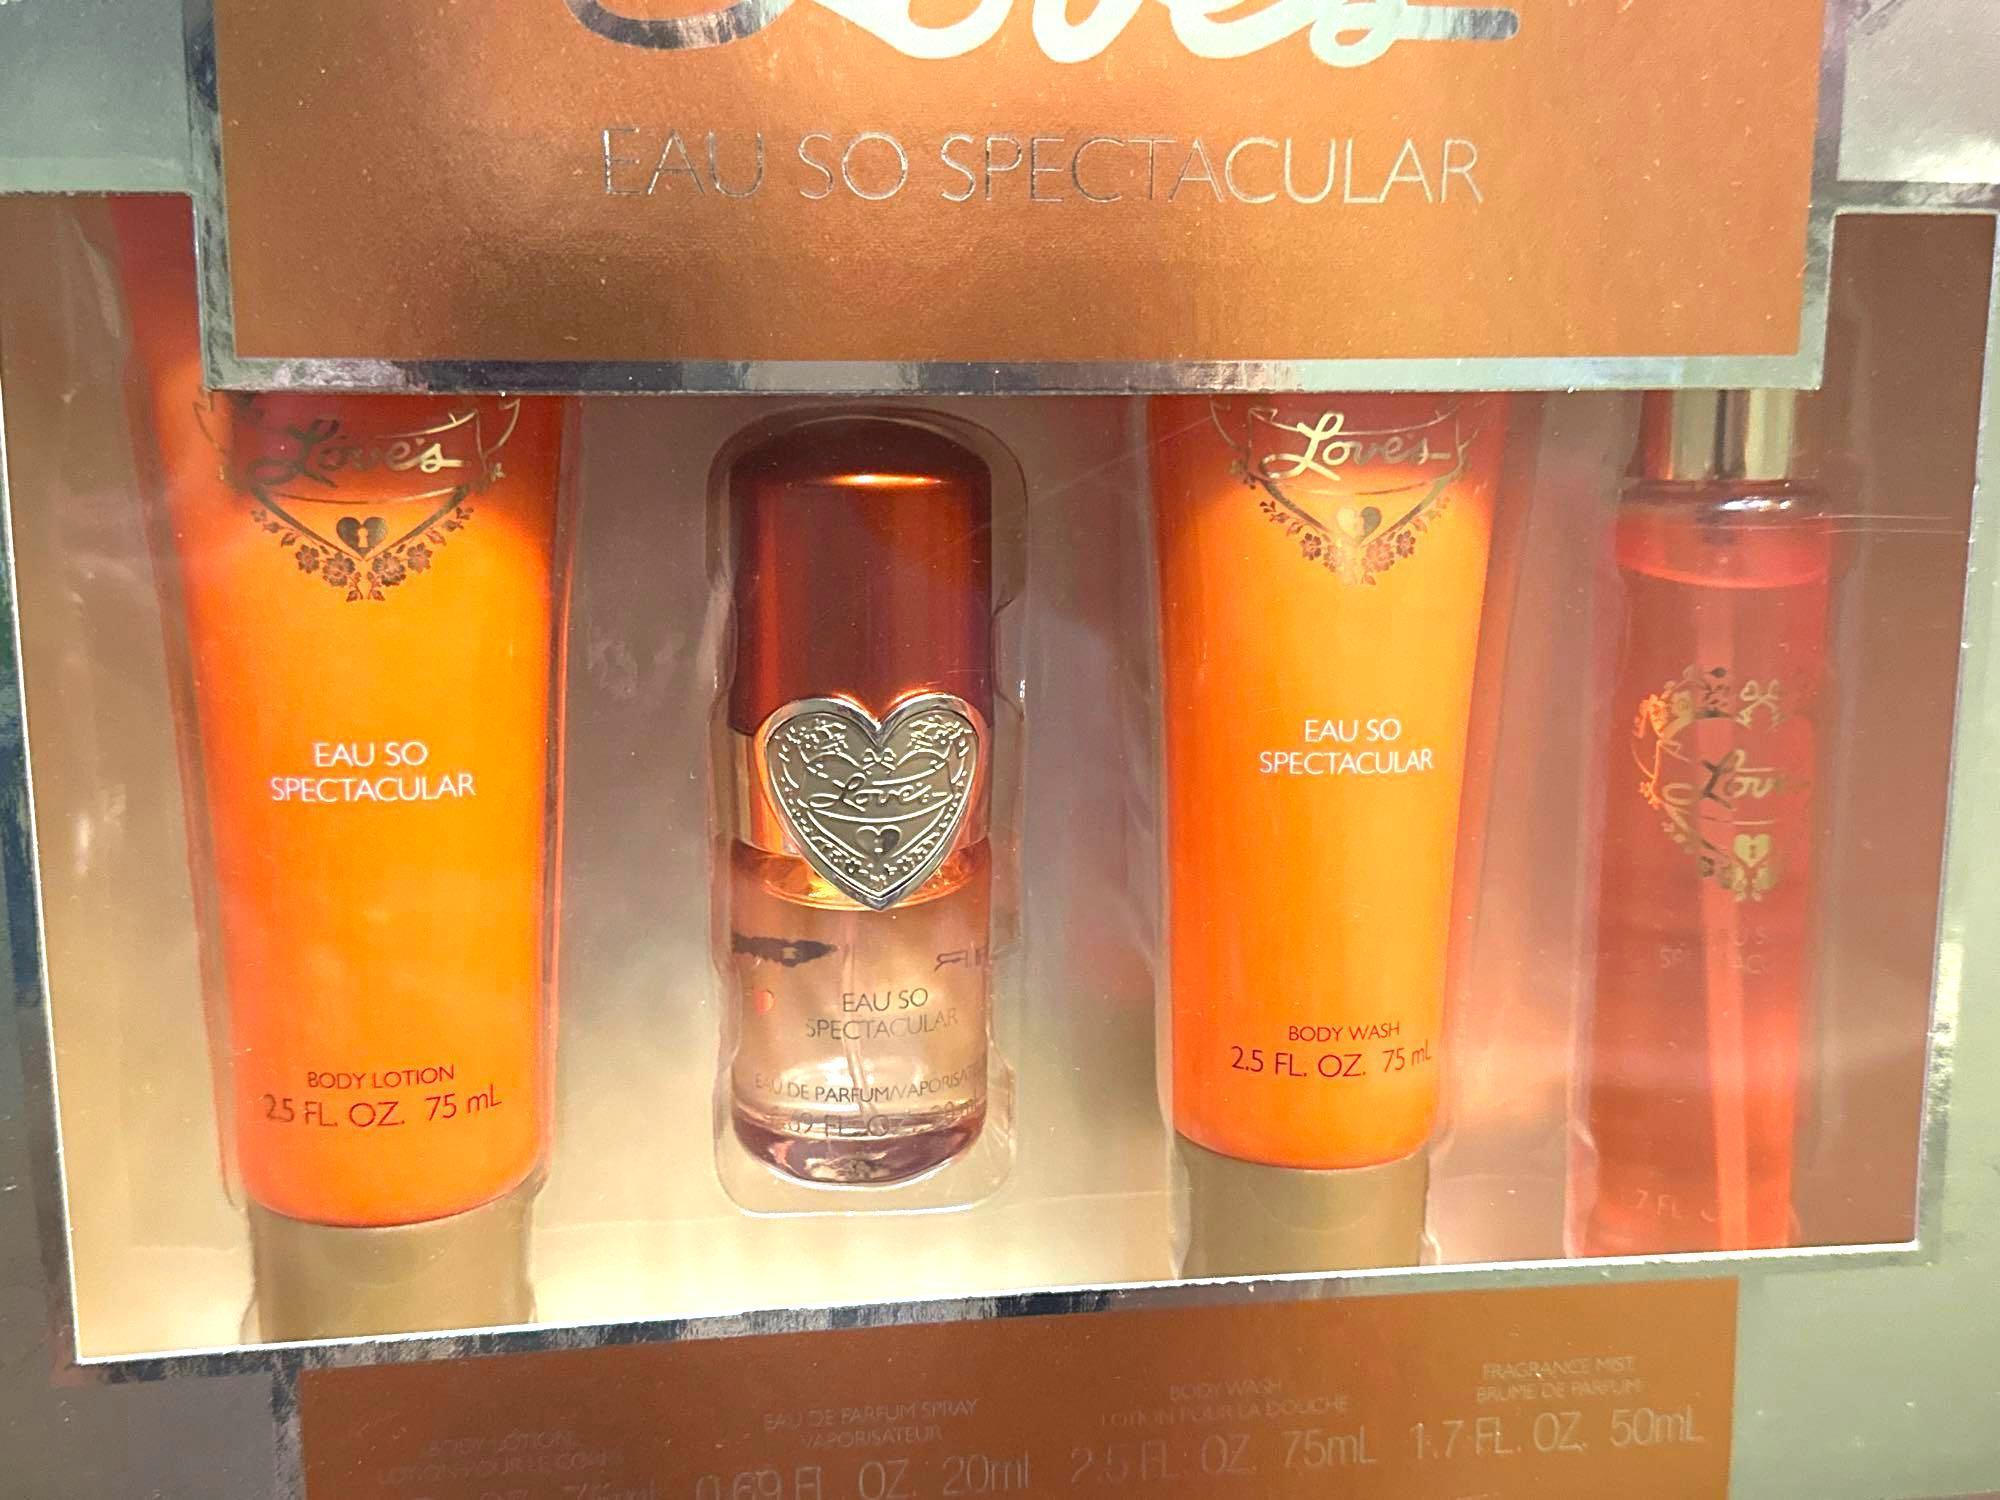 2 New Love's Fragrance Gift Sets